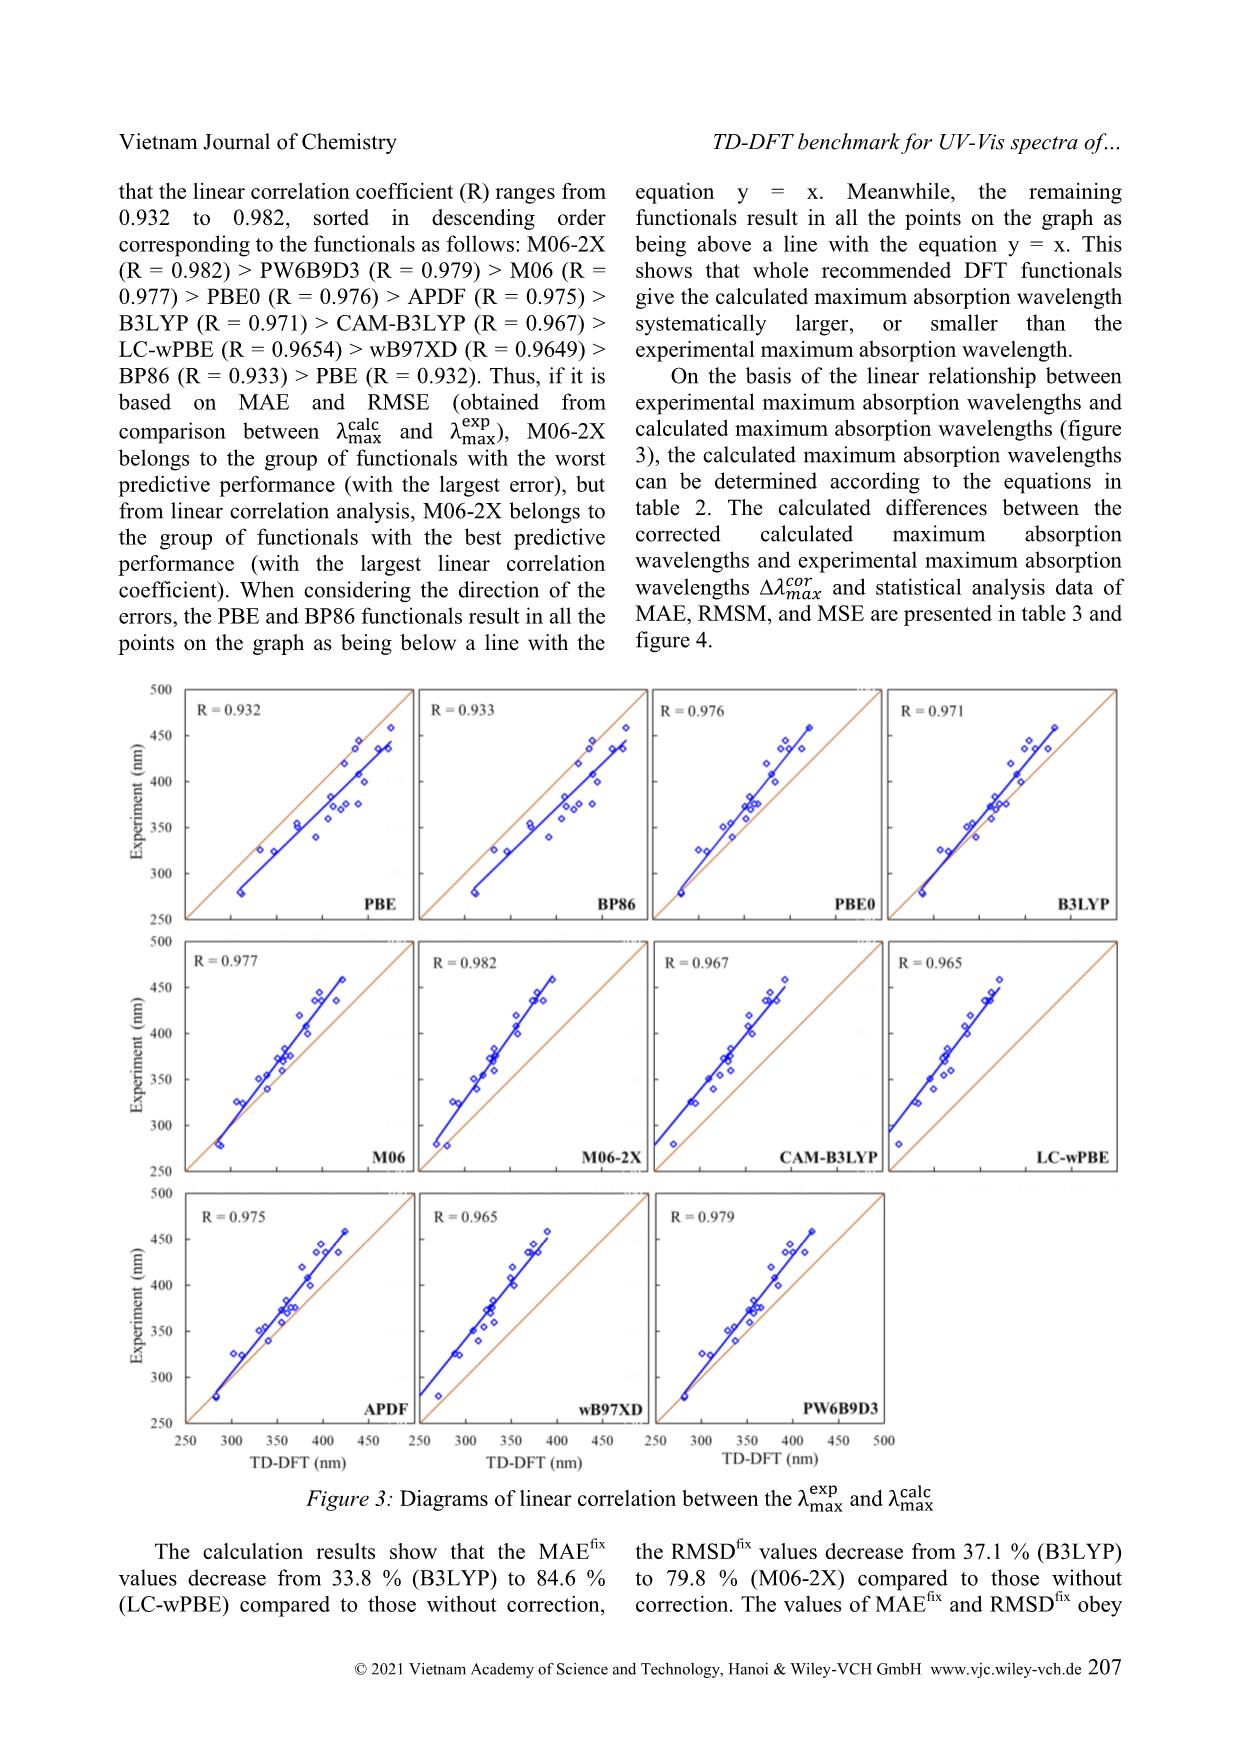 TD-DFT benchmark for UV-Vis spectra of coumarin derivatives trang 5